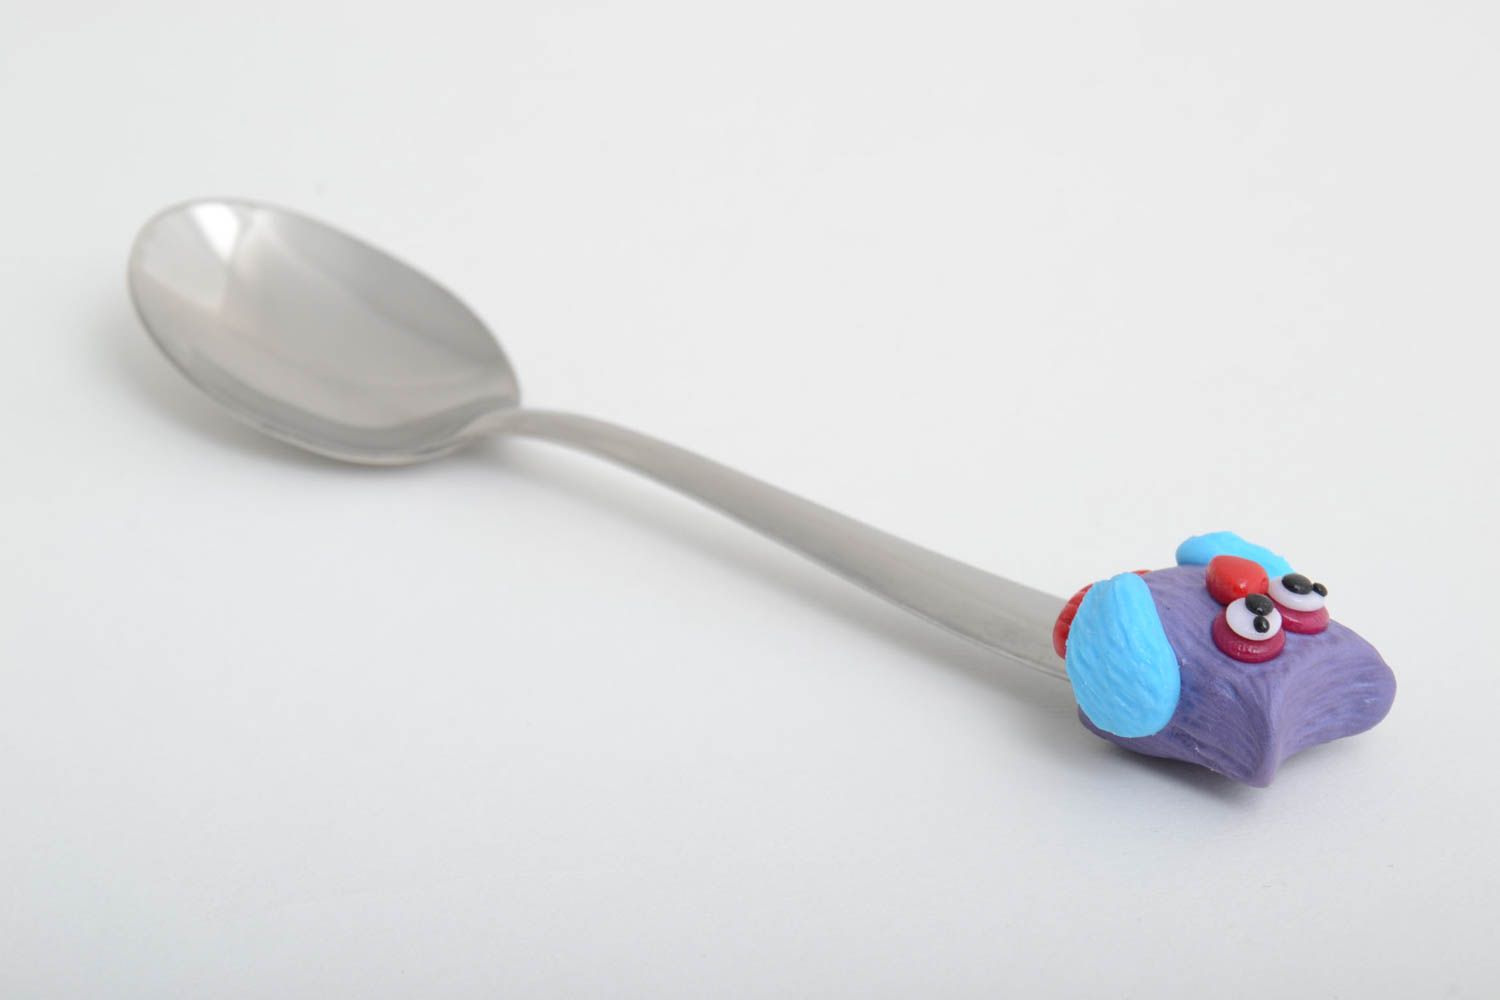 Handmade teaspoon unusual gift ideas for home kitchen utensils decor ideas photo 2